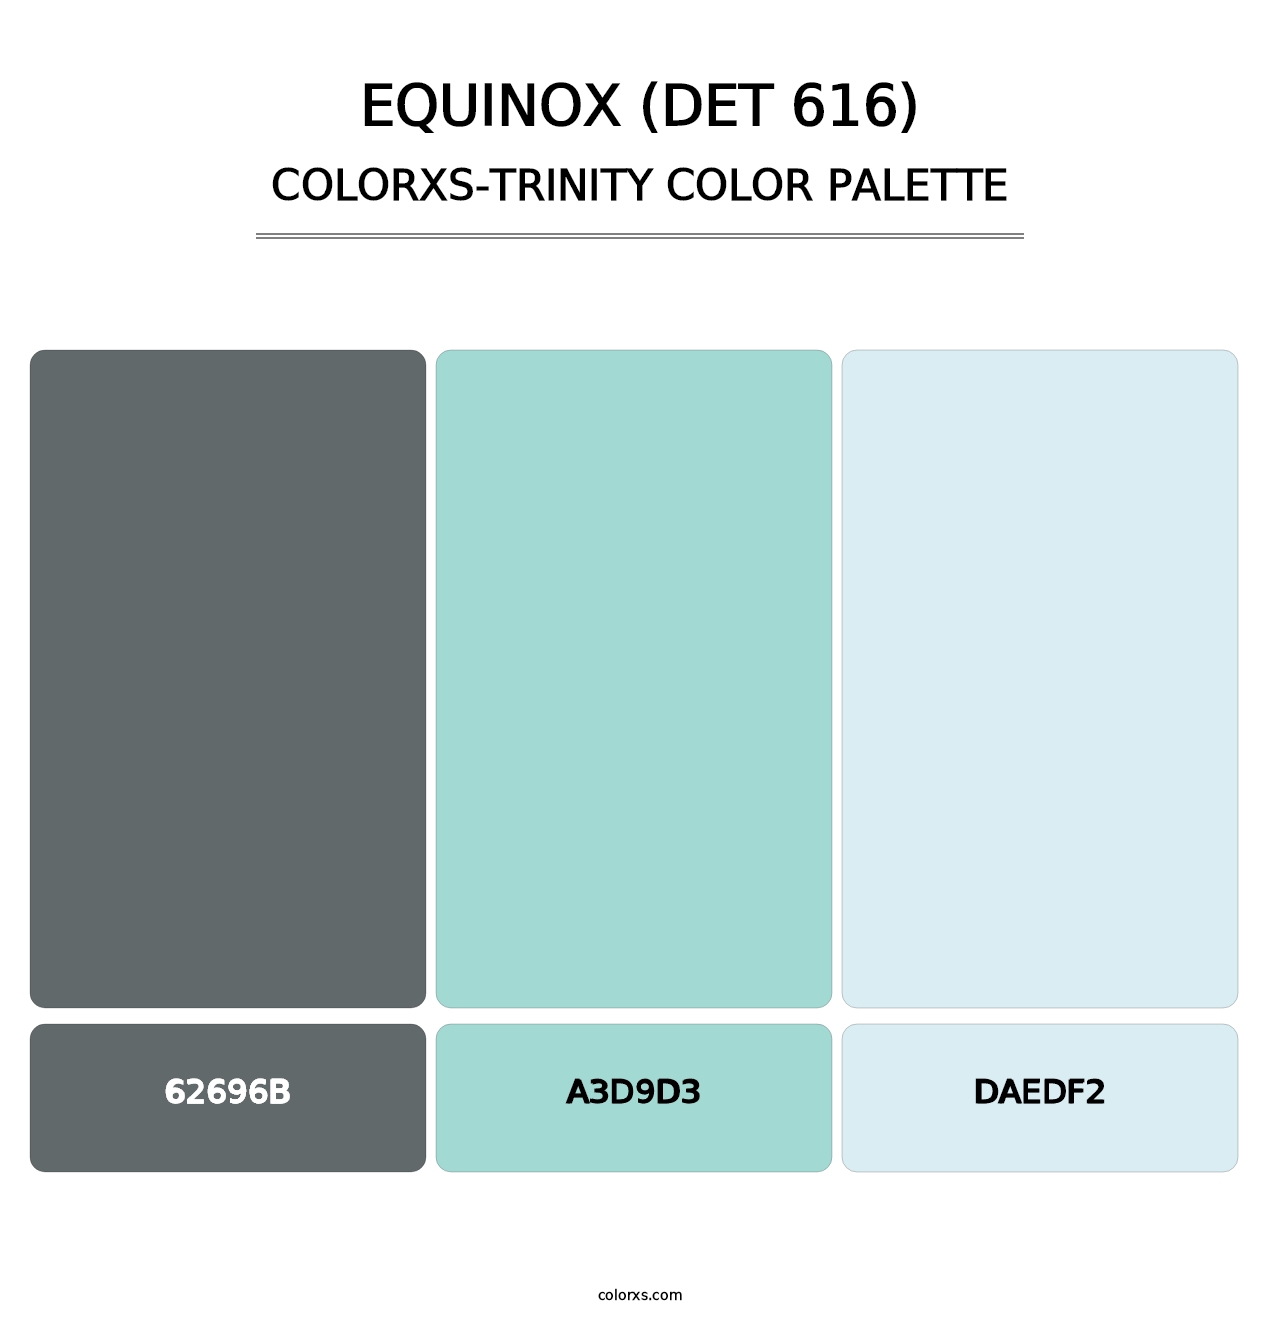 Equinox (DET 616) - Colorxs Trinity Palette